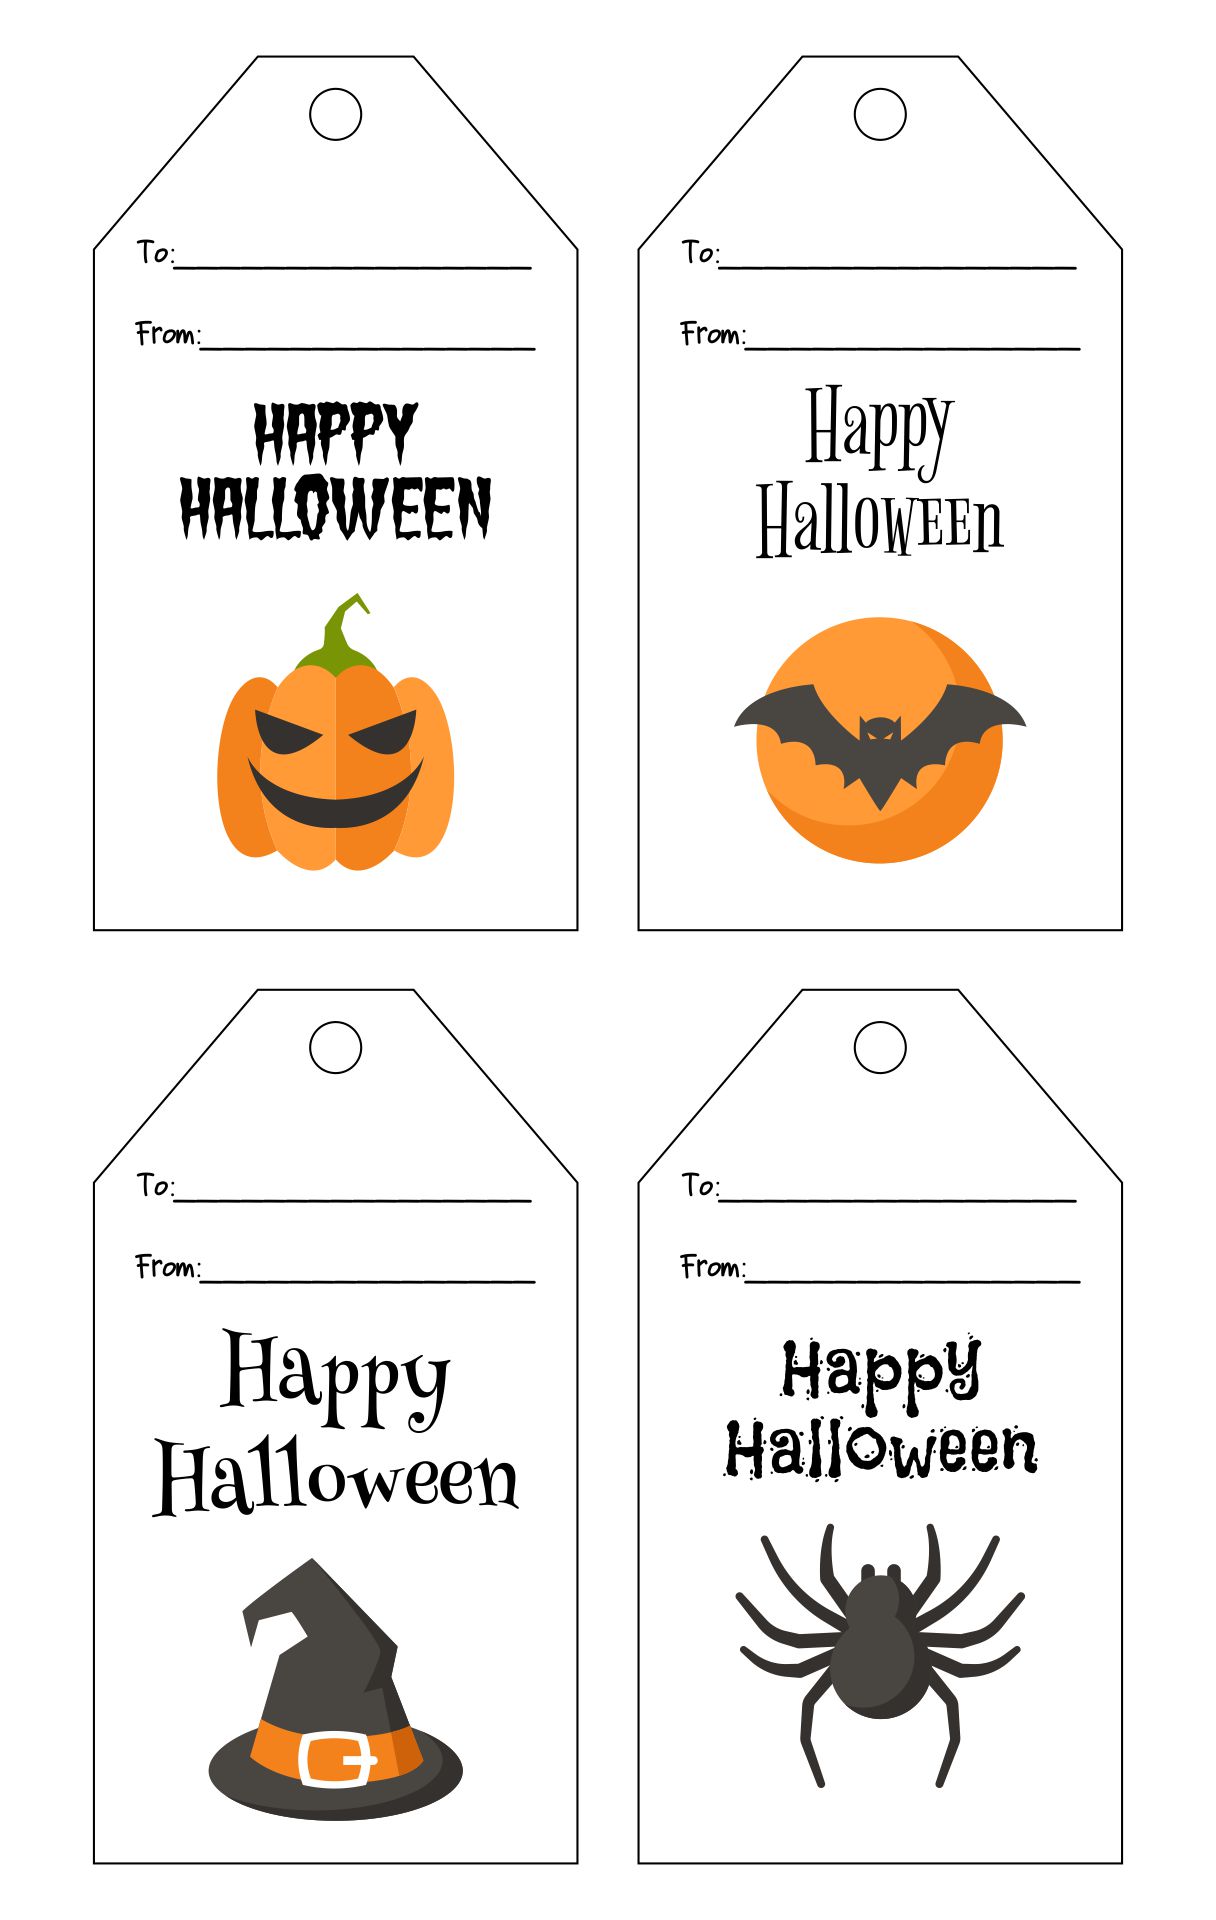 free-printable-halloween-tags-a-pretty-celebration